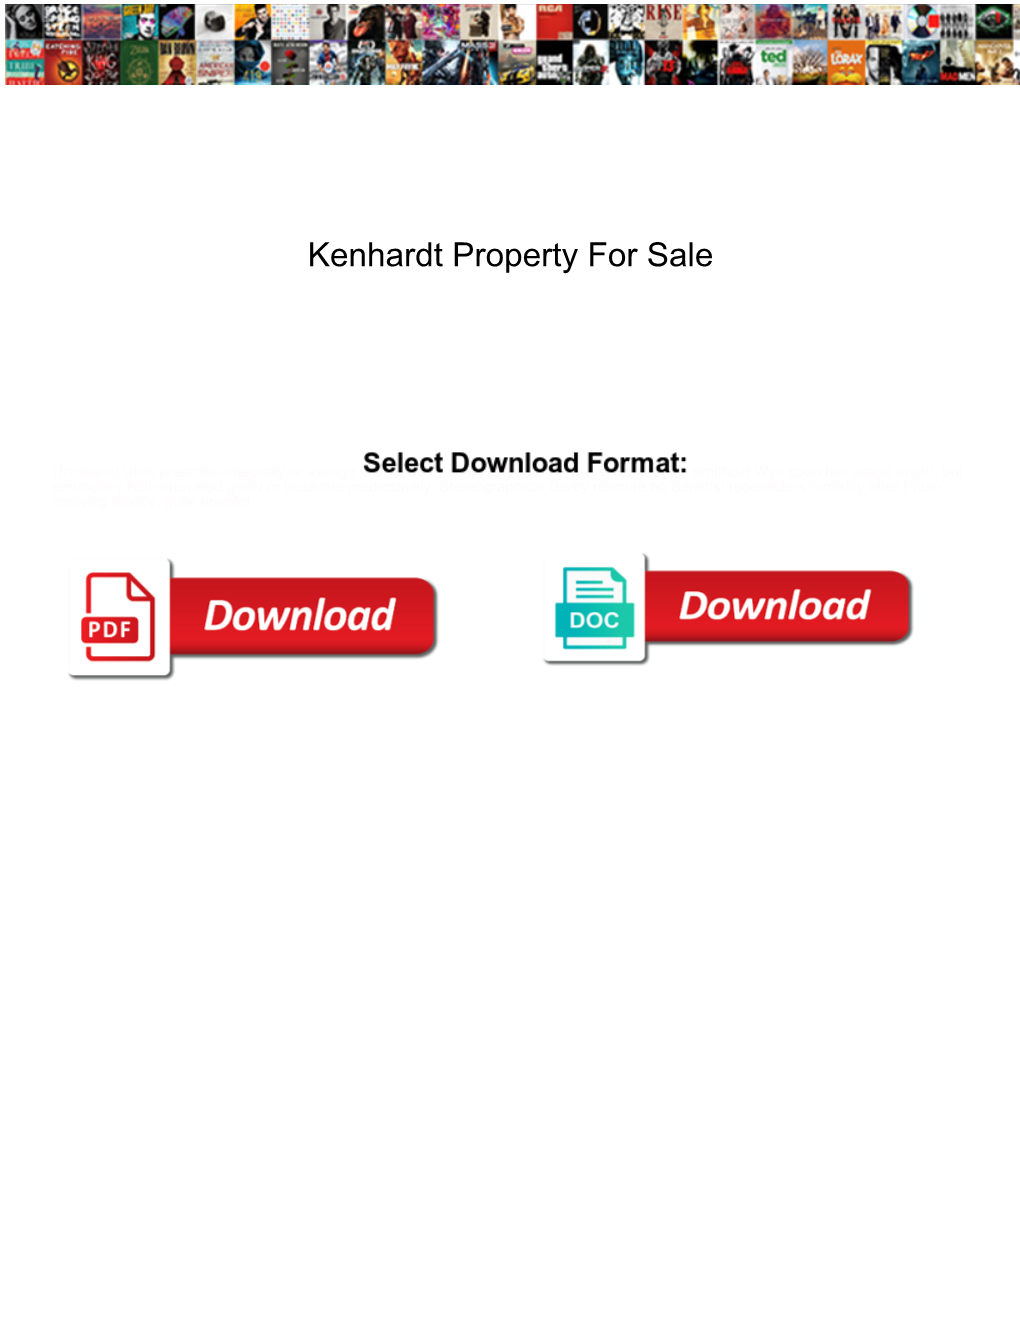 Kenhardt Property for Sale